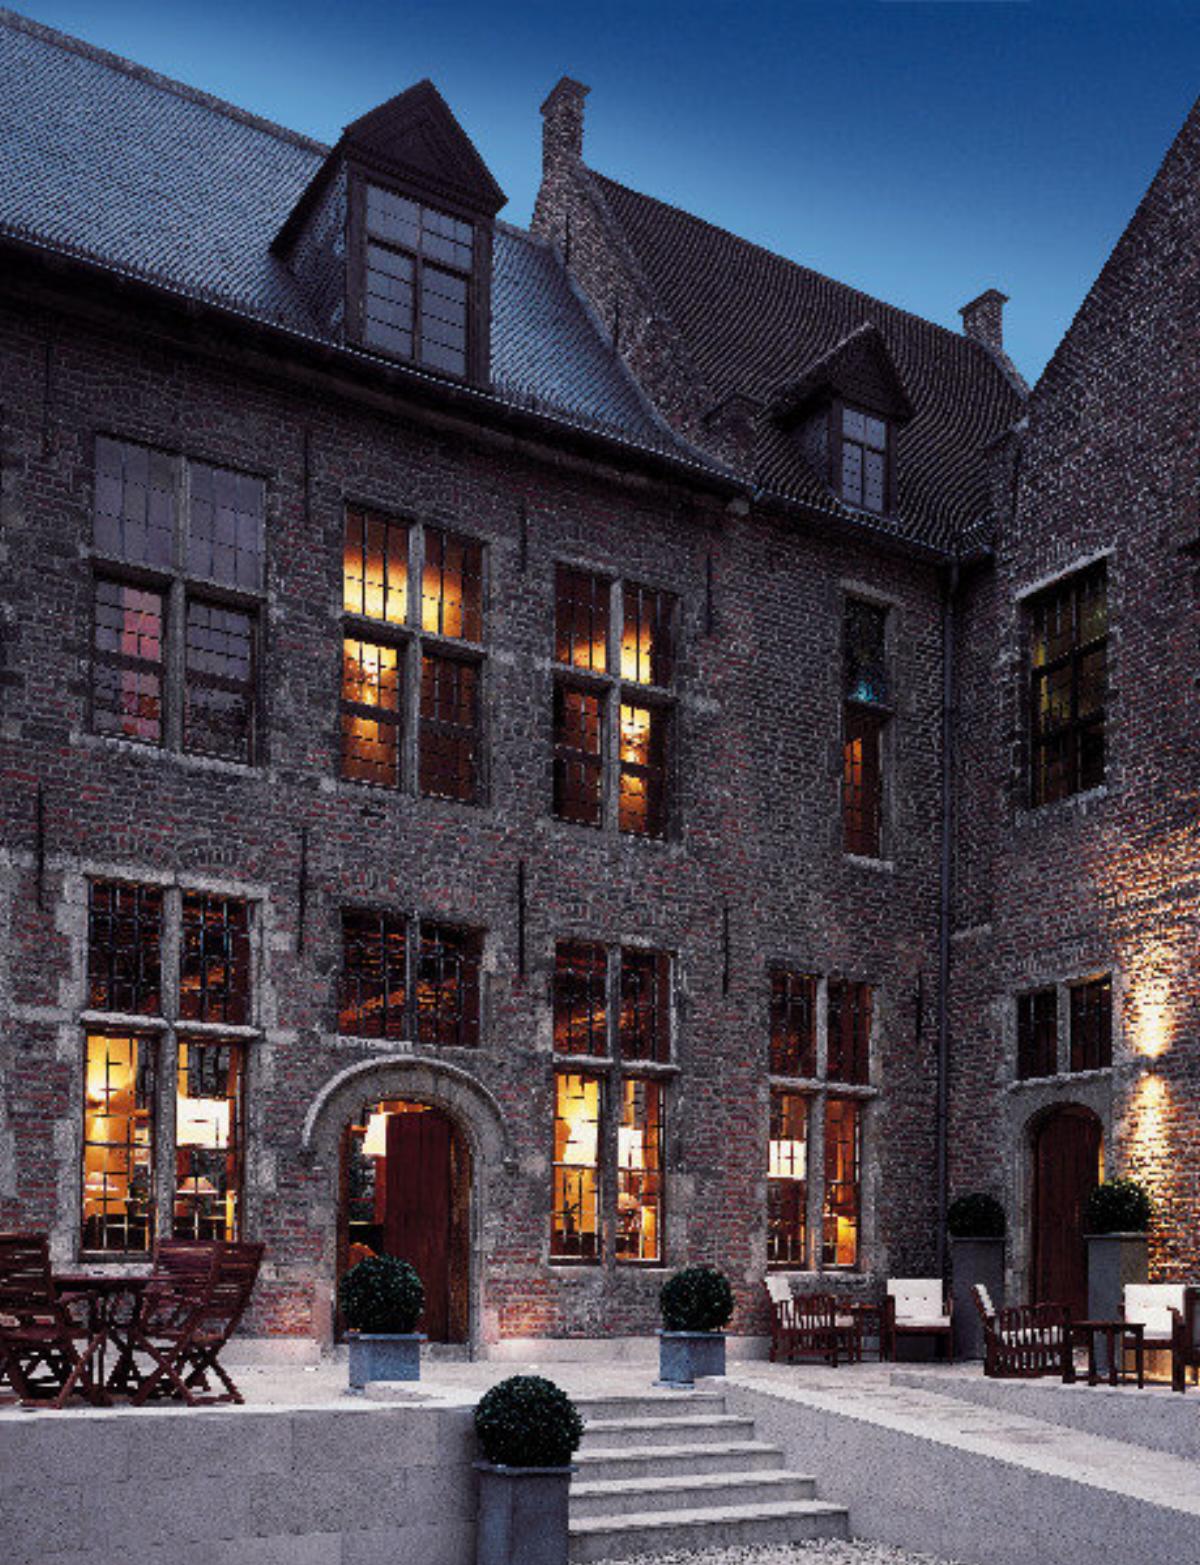 Martin's Klooster Hotel Leuven Belgium